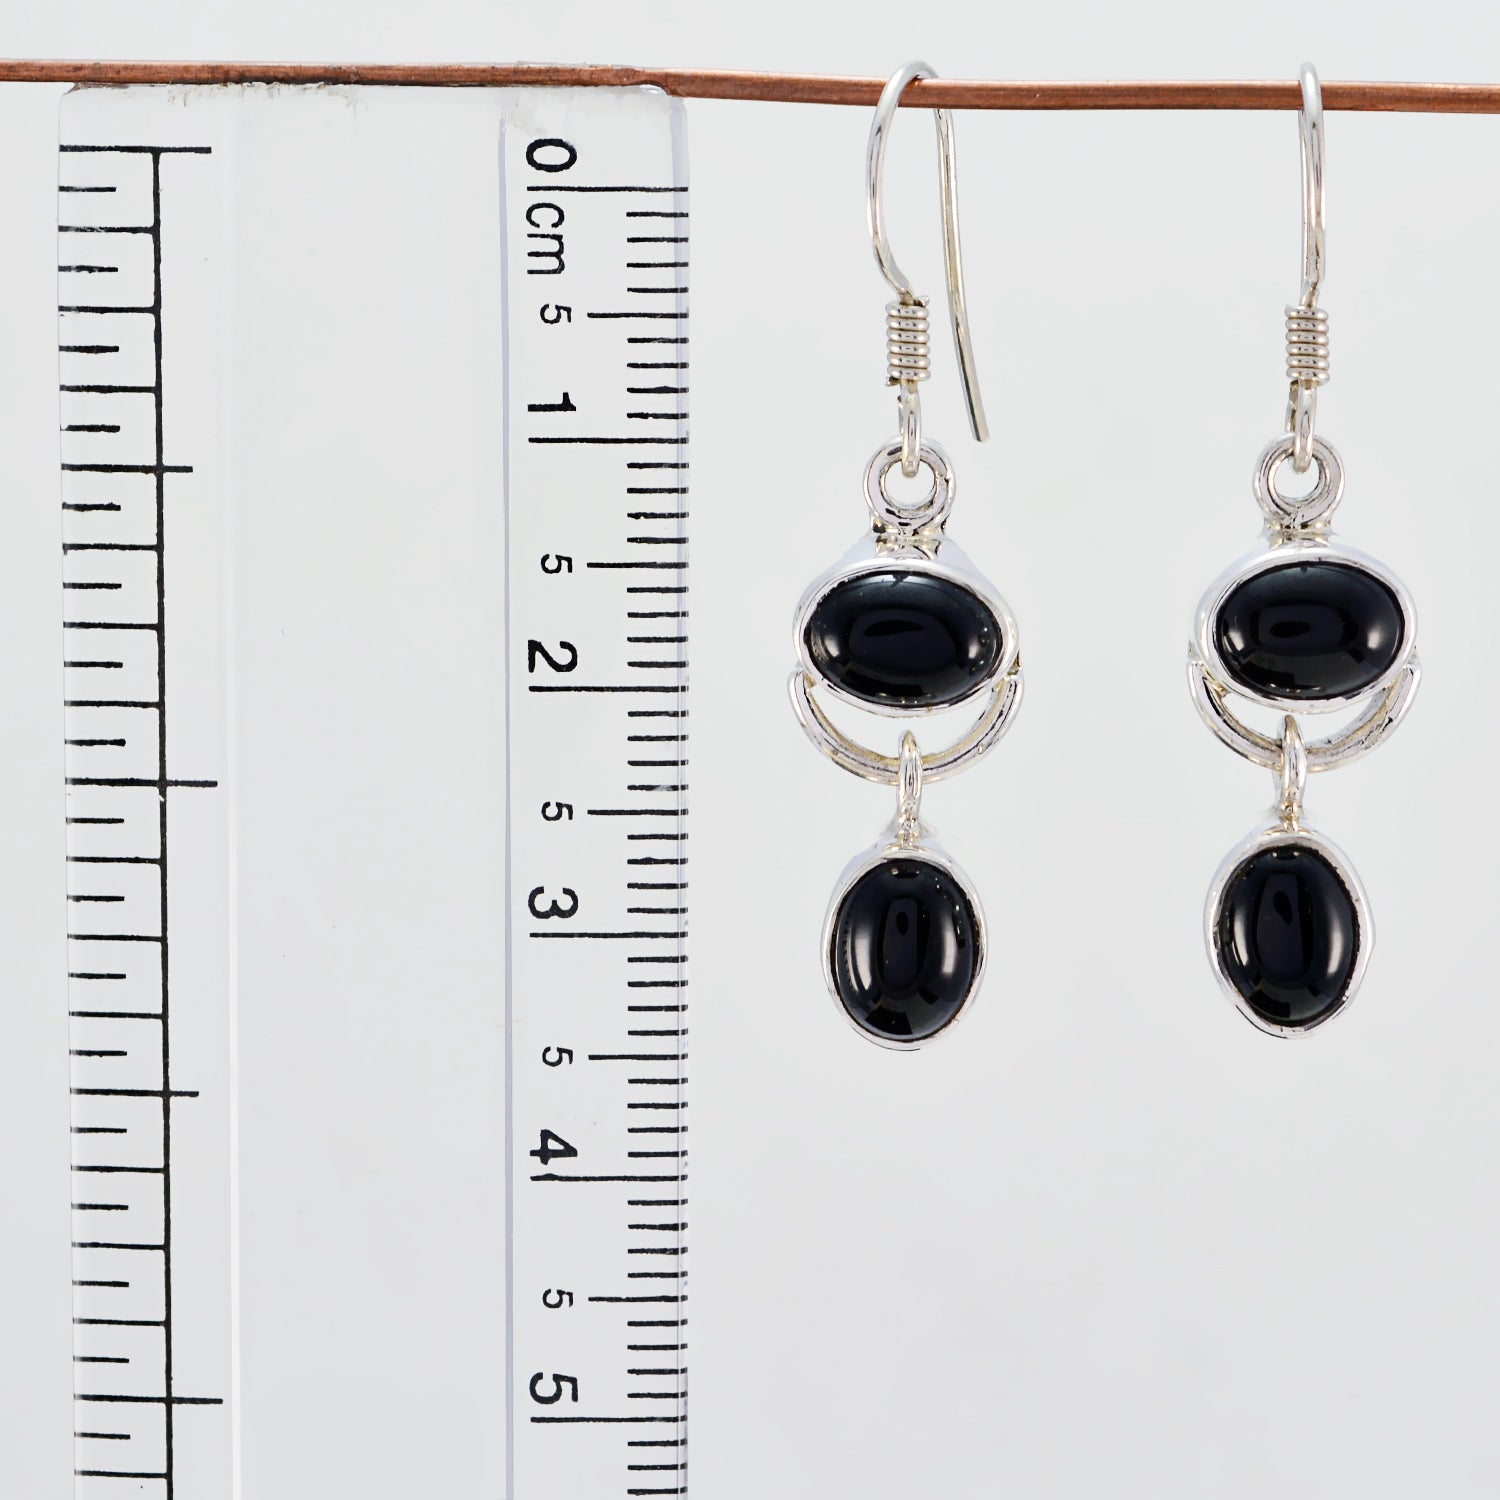 Riyo Good Gemstones multi shape Cabochon Black Onyx Silver Earrings cyber Monday gift